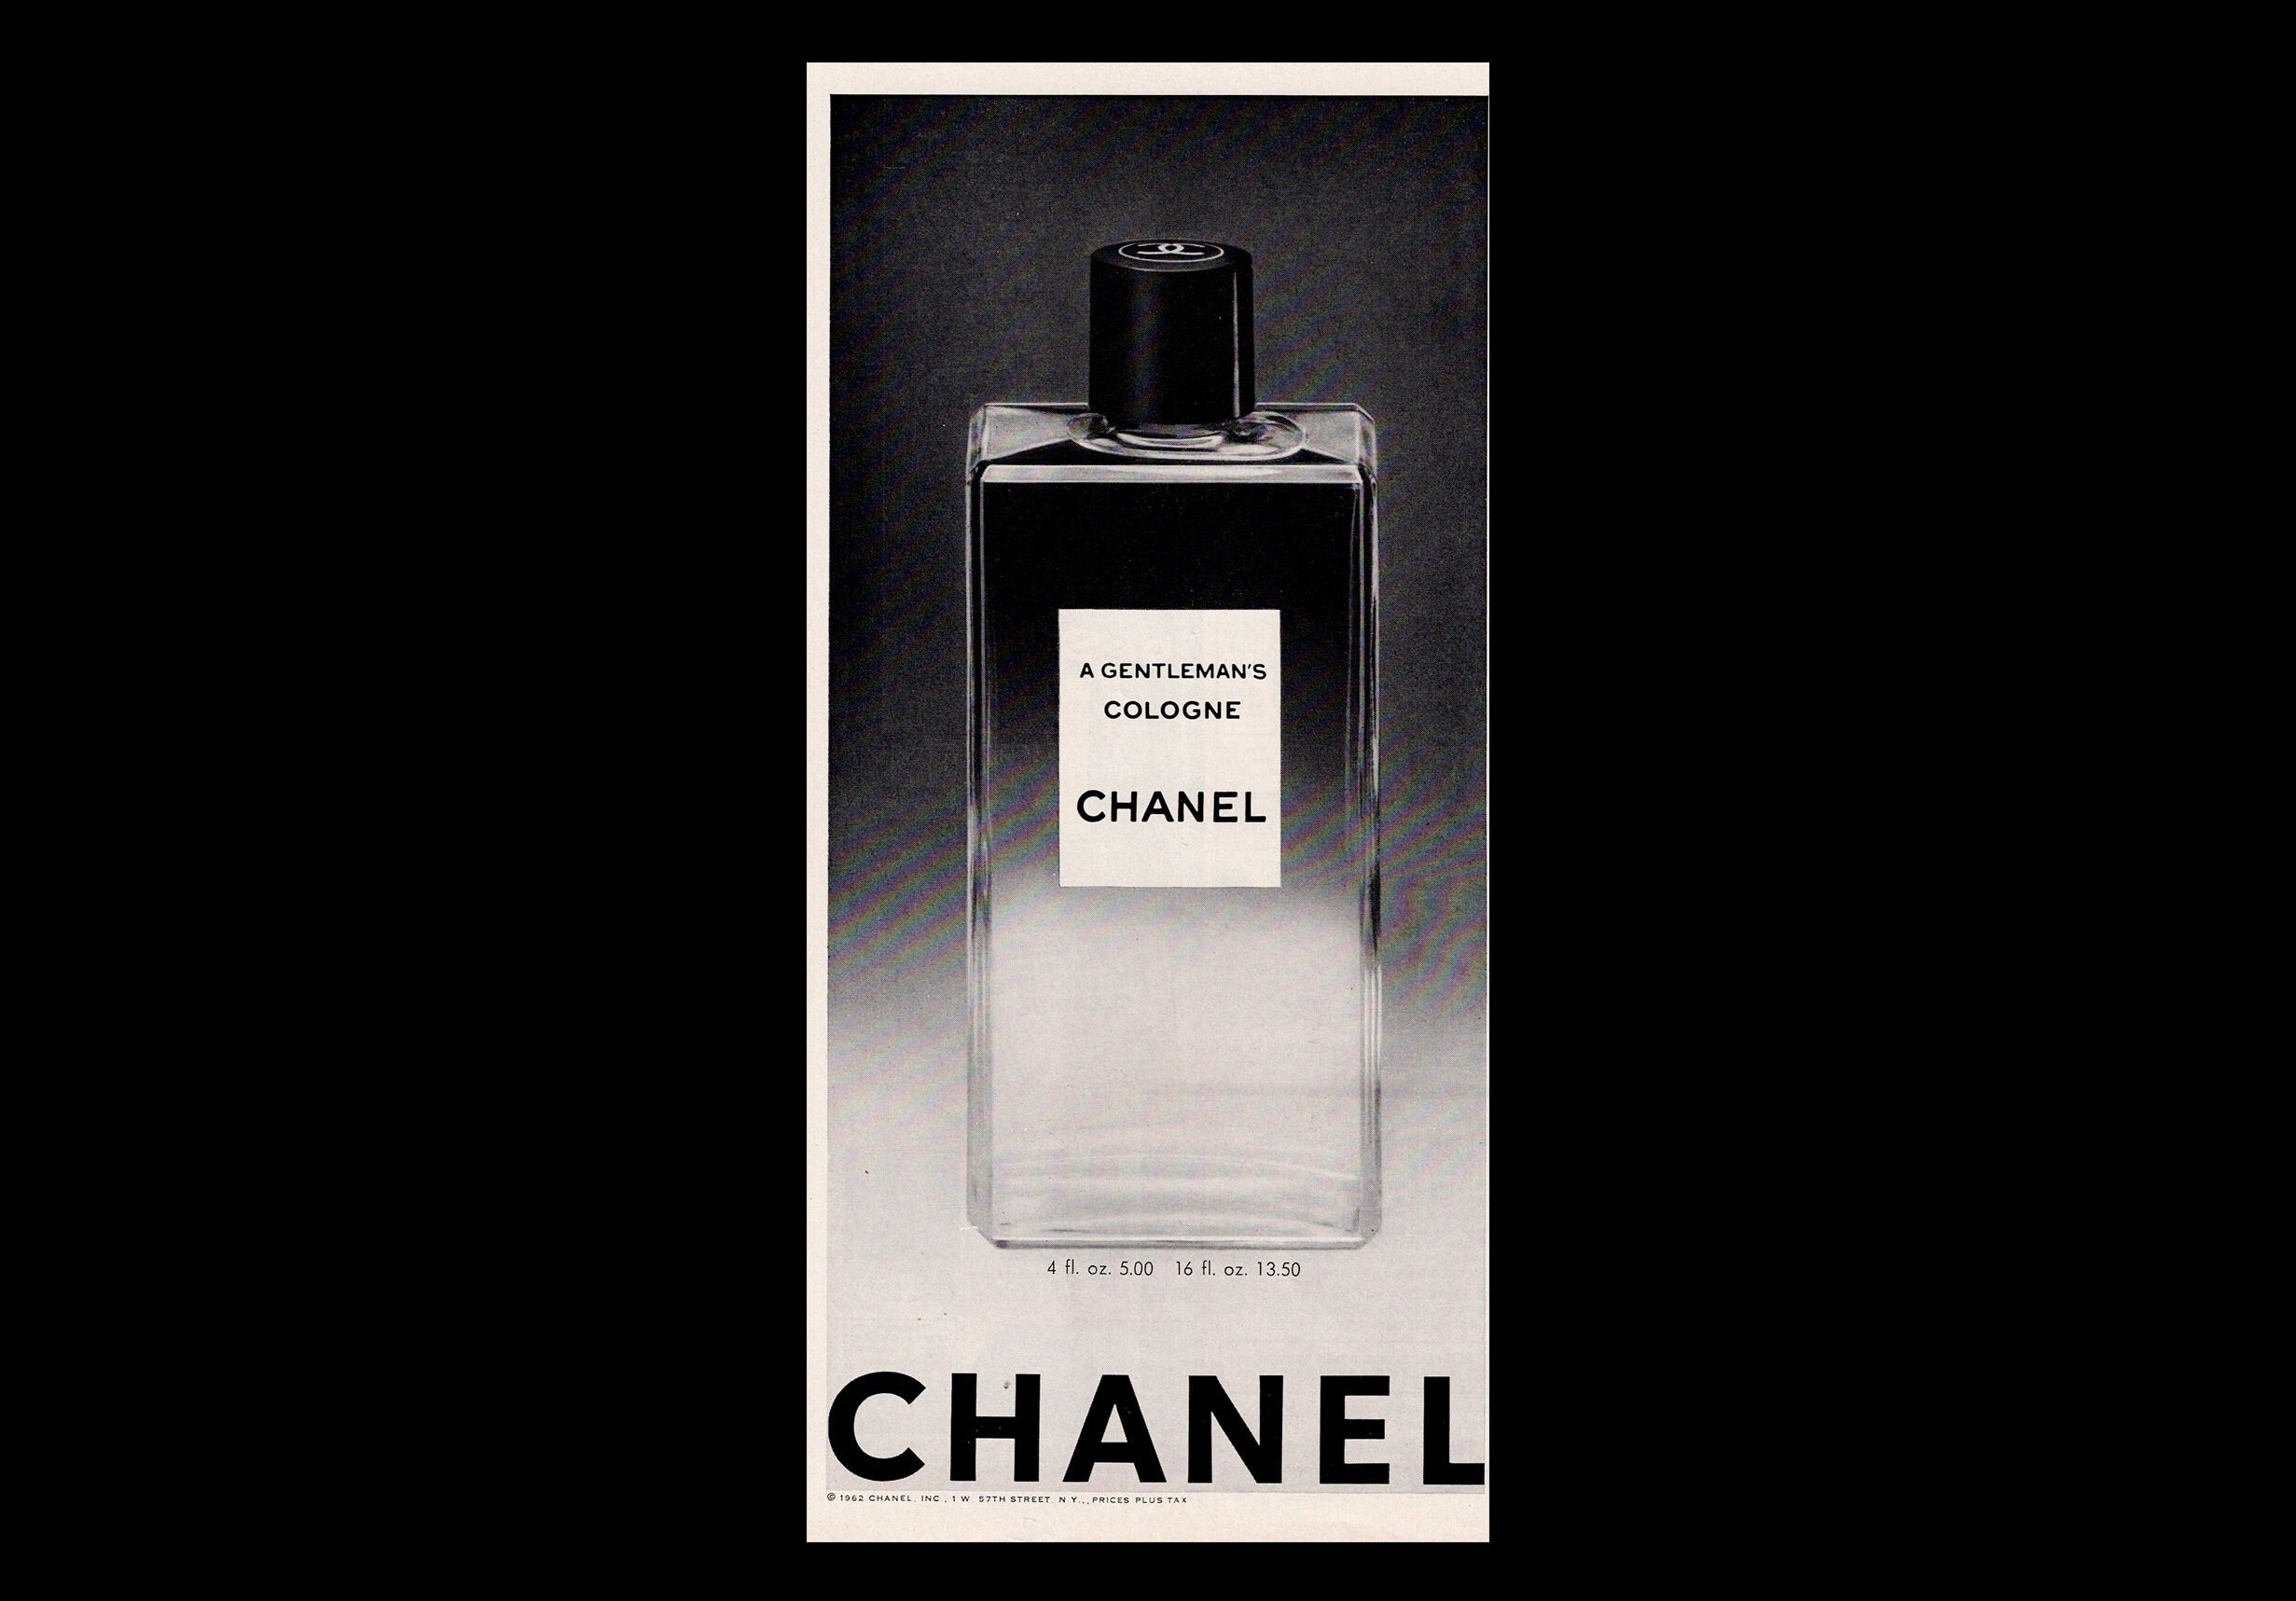 1962 Chanel Gentleman's Cologne Magazine Ad Beauty 